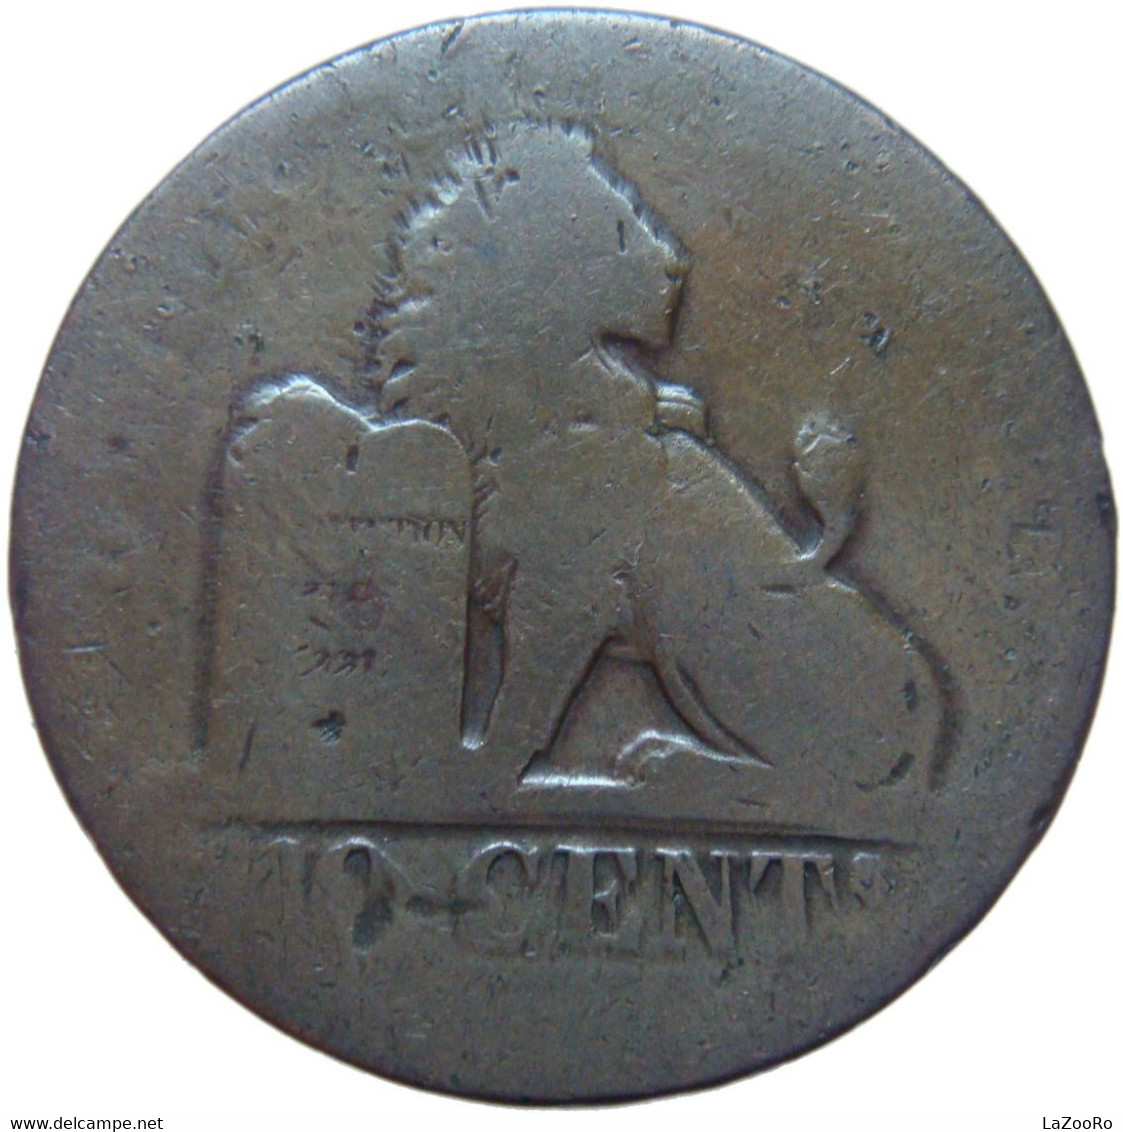 LaZooRo: Belgium 10 Centimes 1833 VG / F - 10 Cent